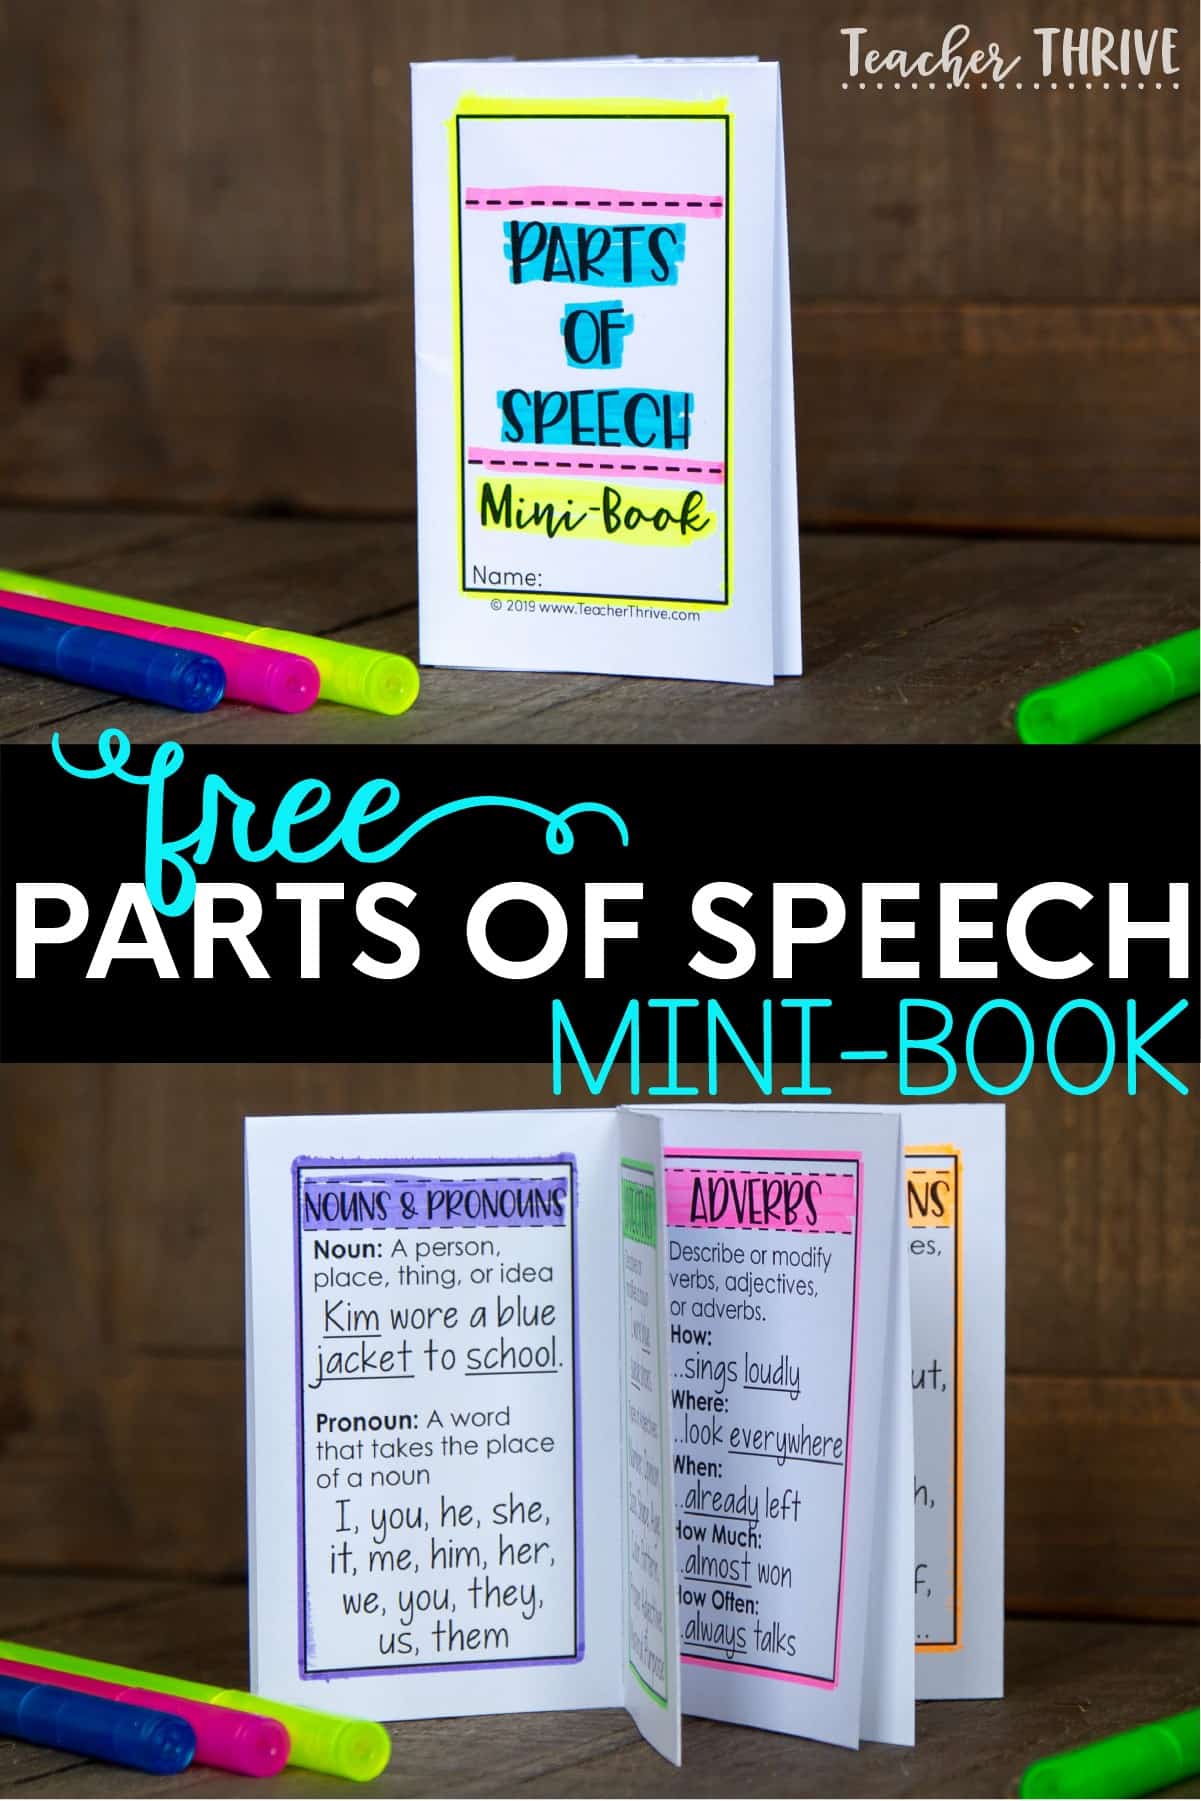 books on speech making